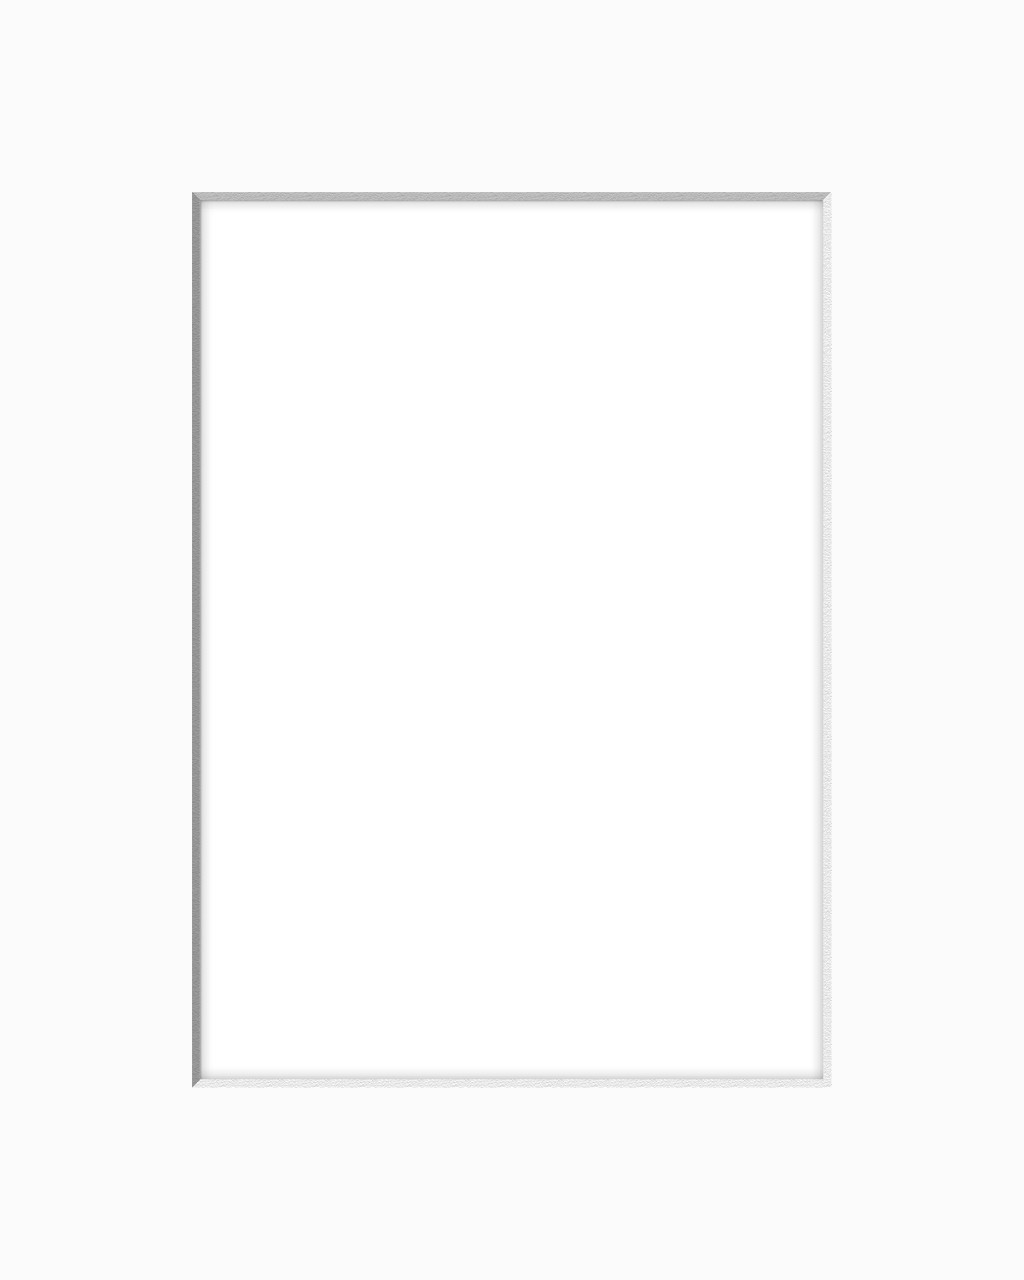 Mat Board Sheets (Single)